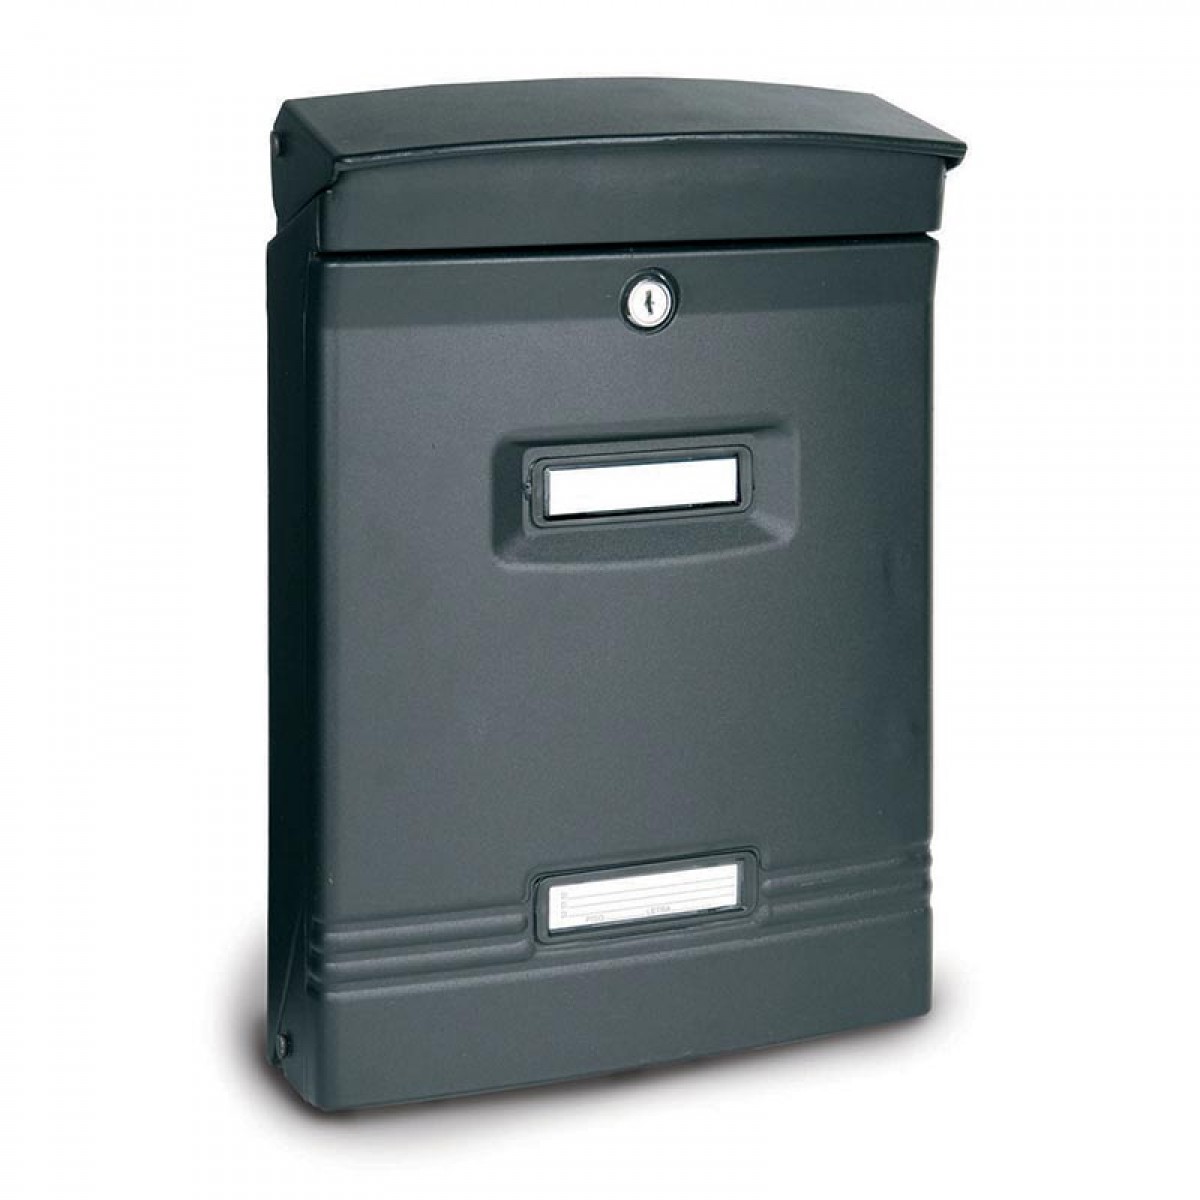 Alubox Ibiza Letterbox finished in Dark Grey